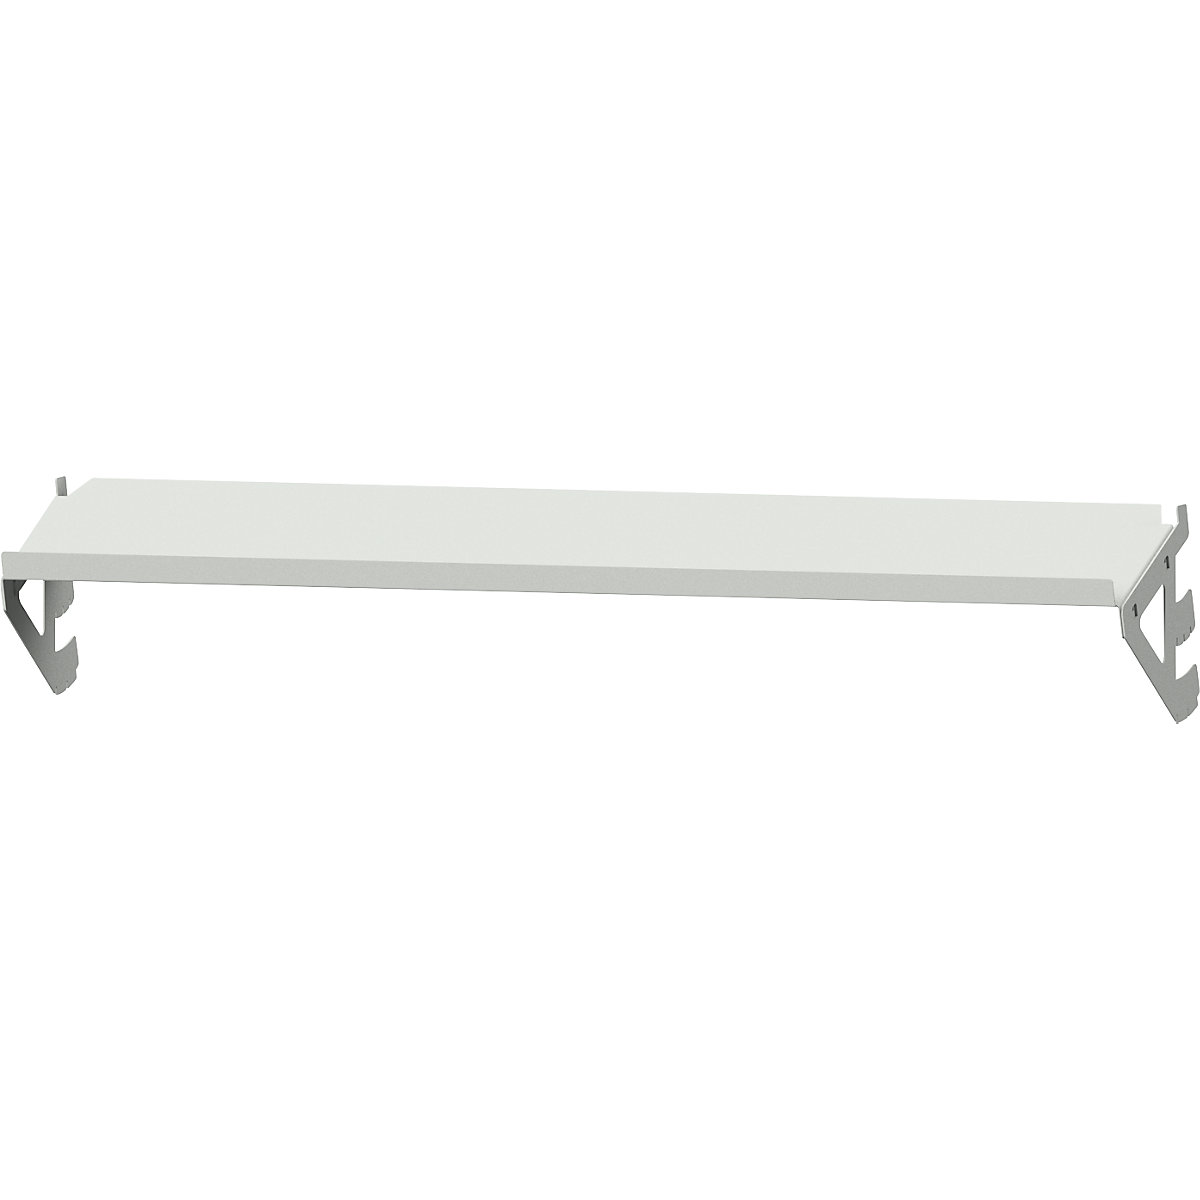 Shelf with adjustable inclination - ANKE